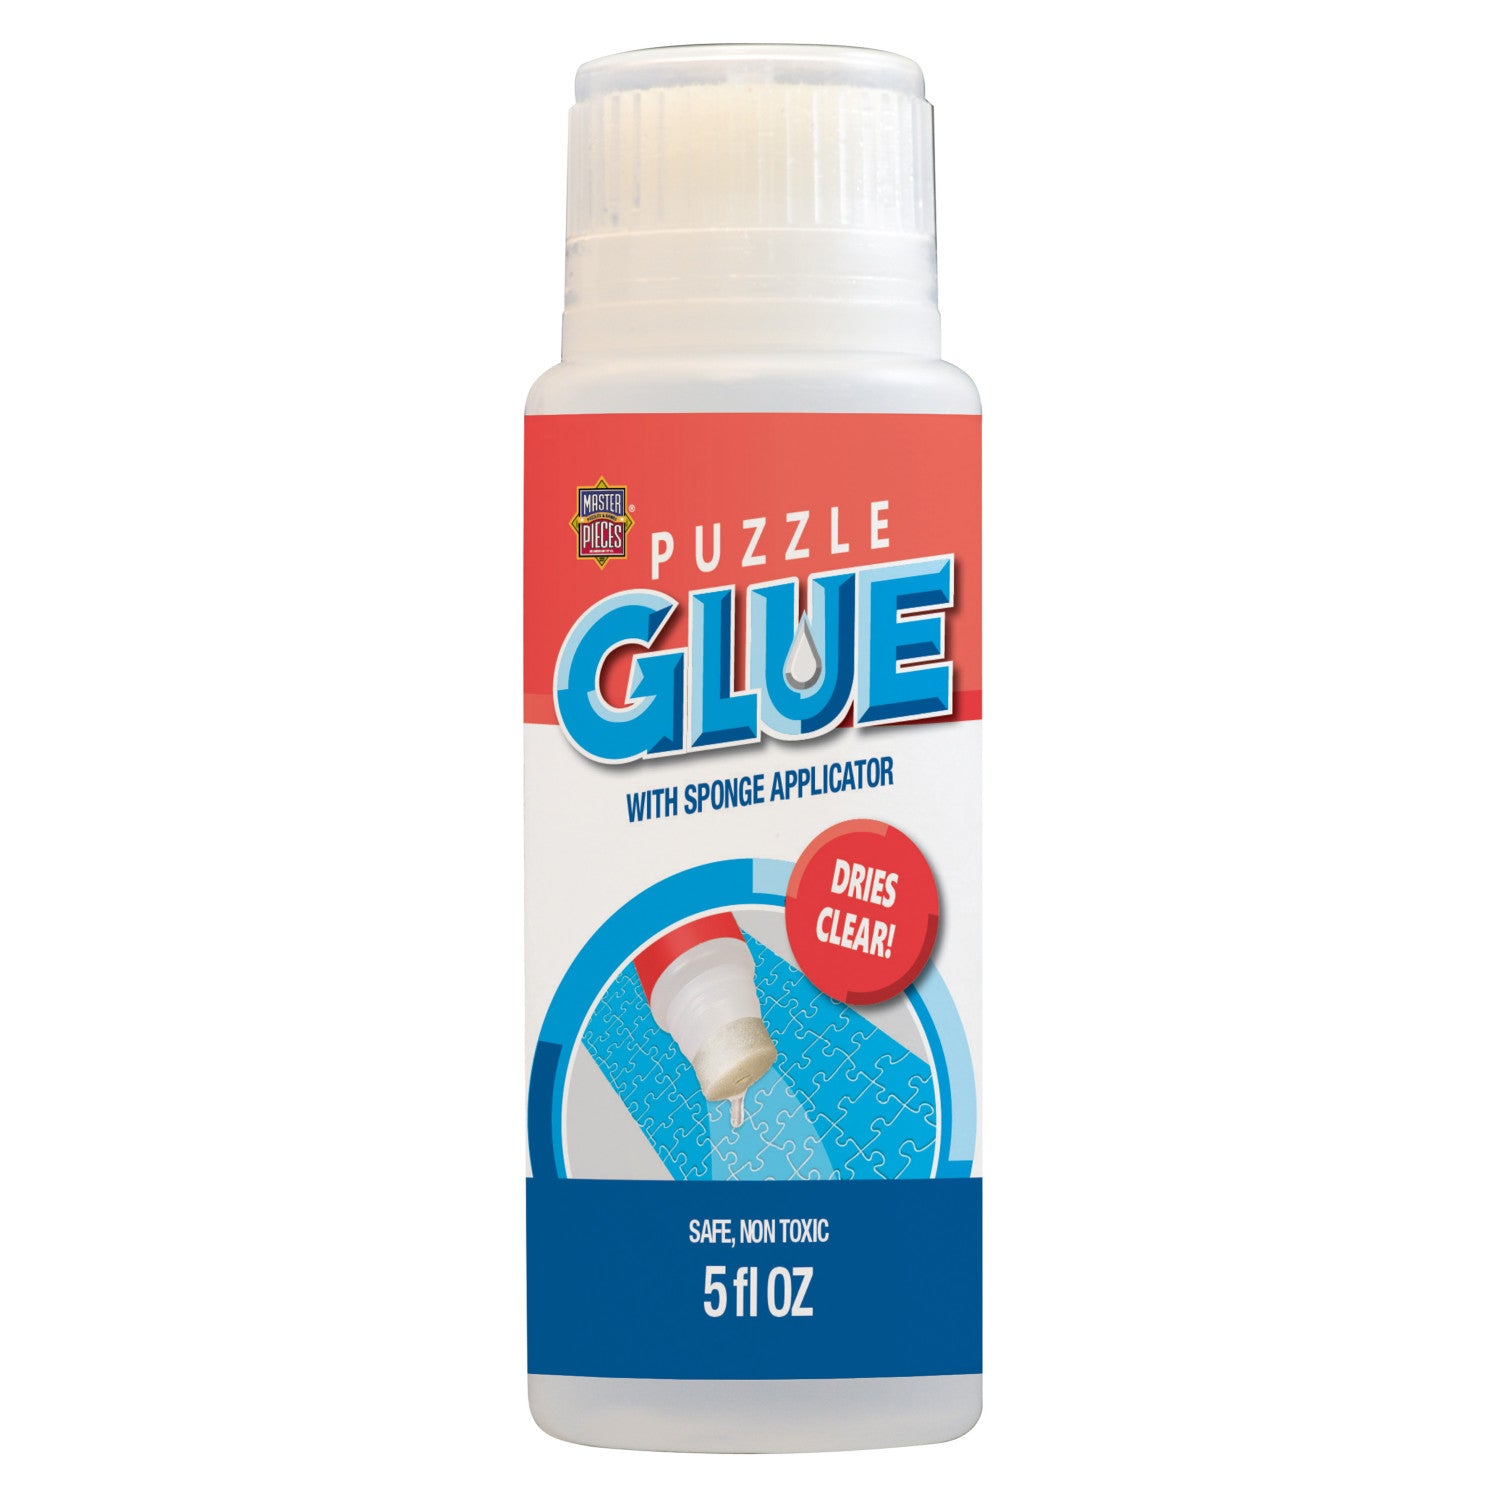 Puzzle Glue with Sponge Applicator - 5 oz